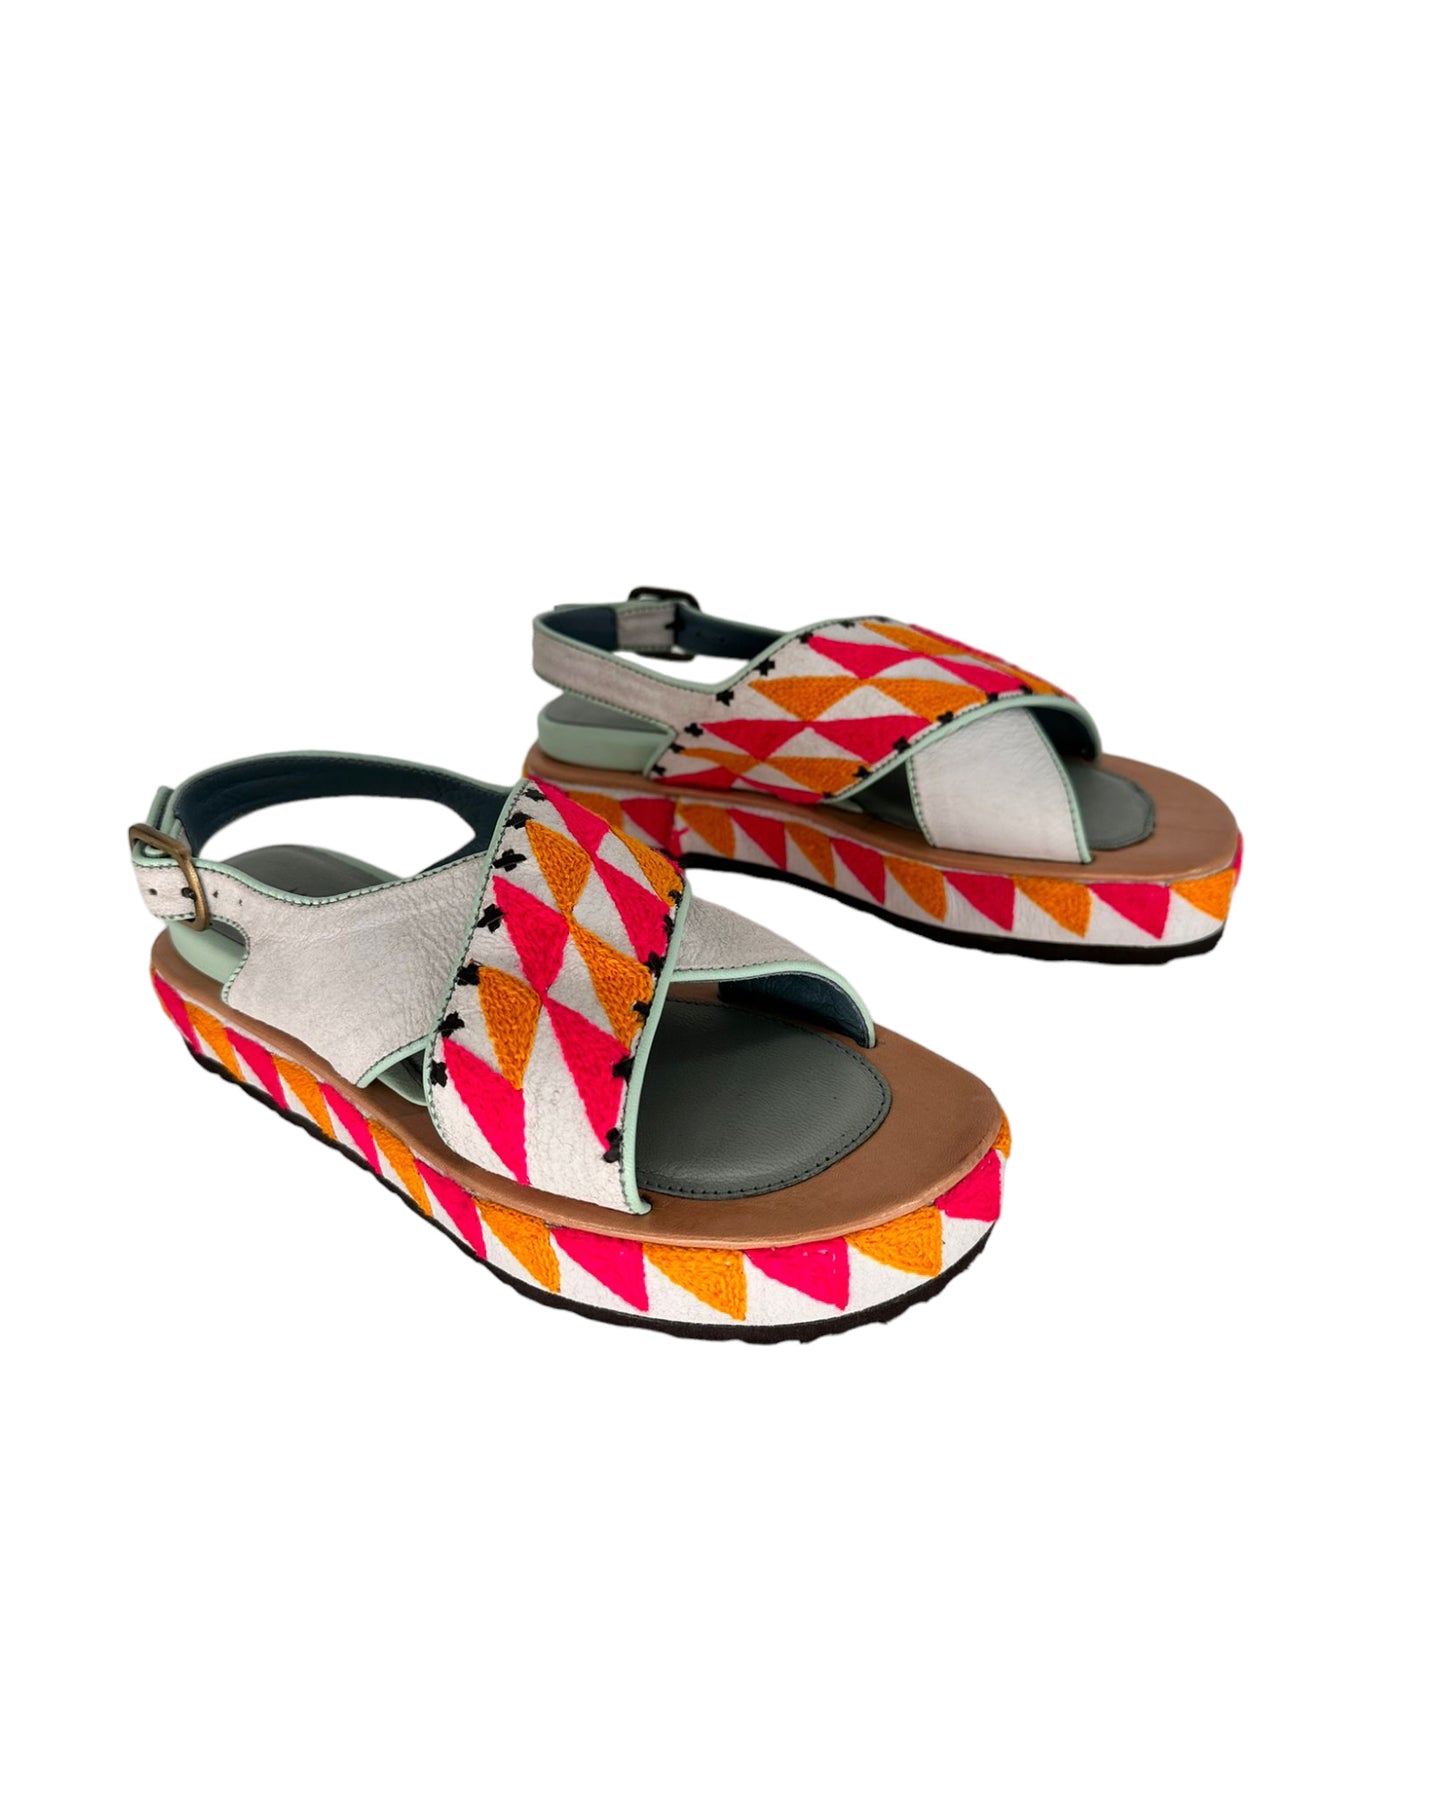 Ponza Geo Block leather sandals